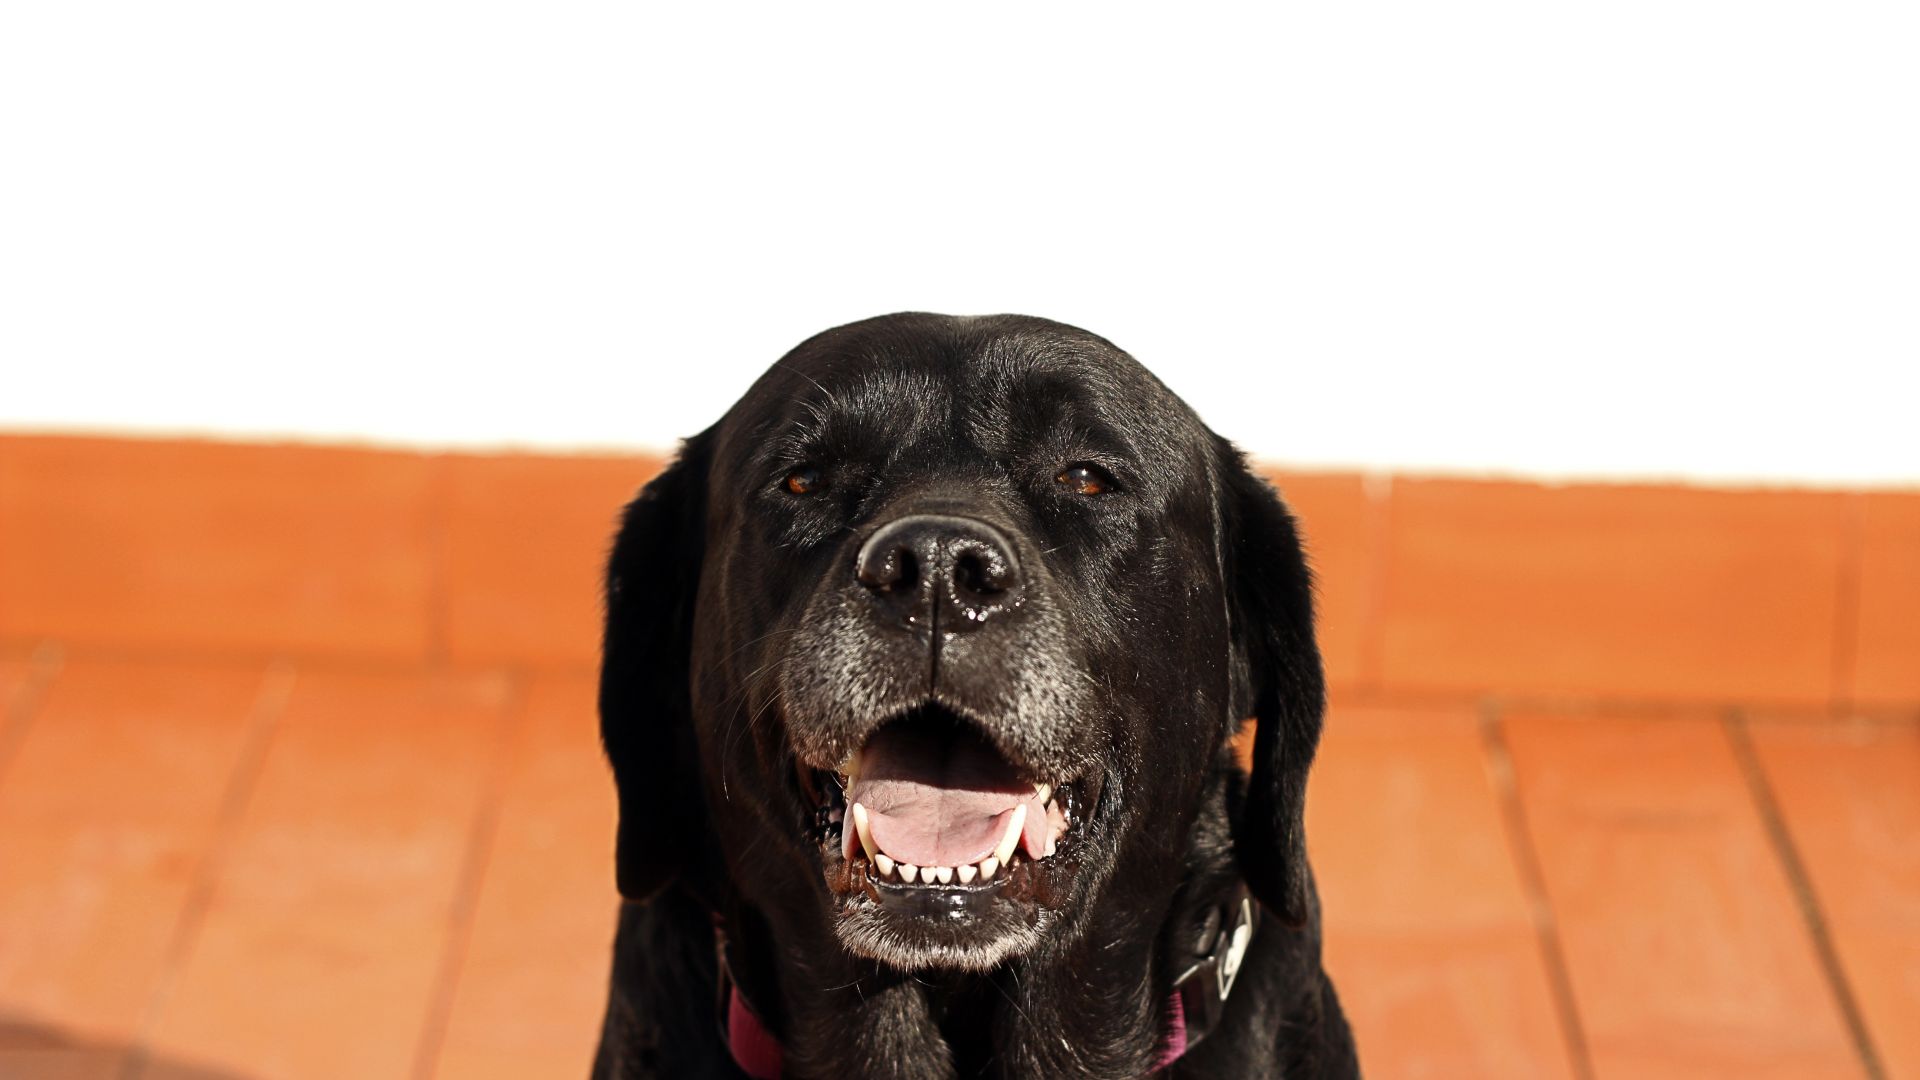 Desktop Wallpaper Black Labrador Dog Muzzle, Hd Image, Picture, Background,  0ocap7